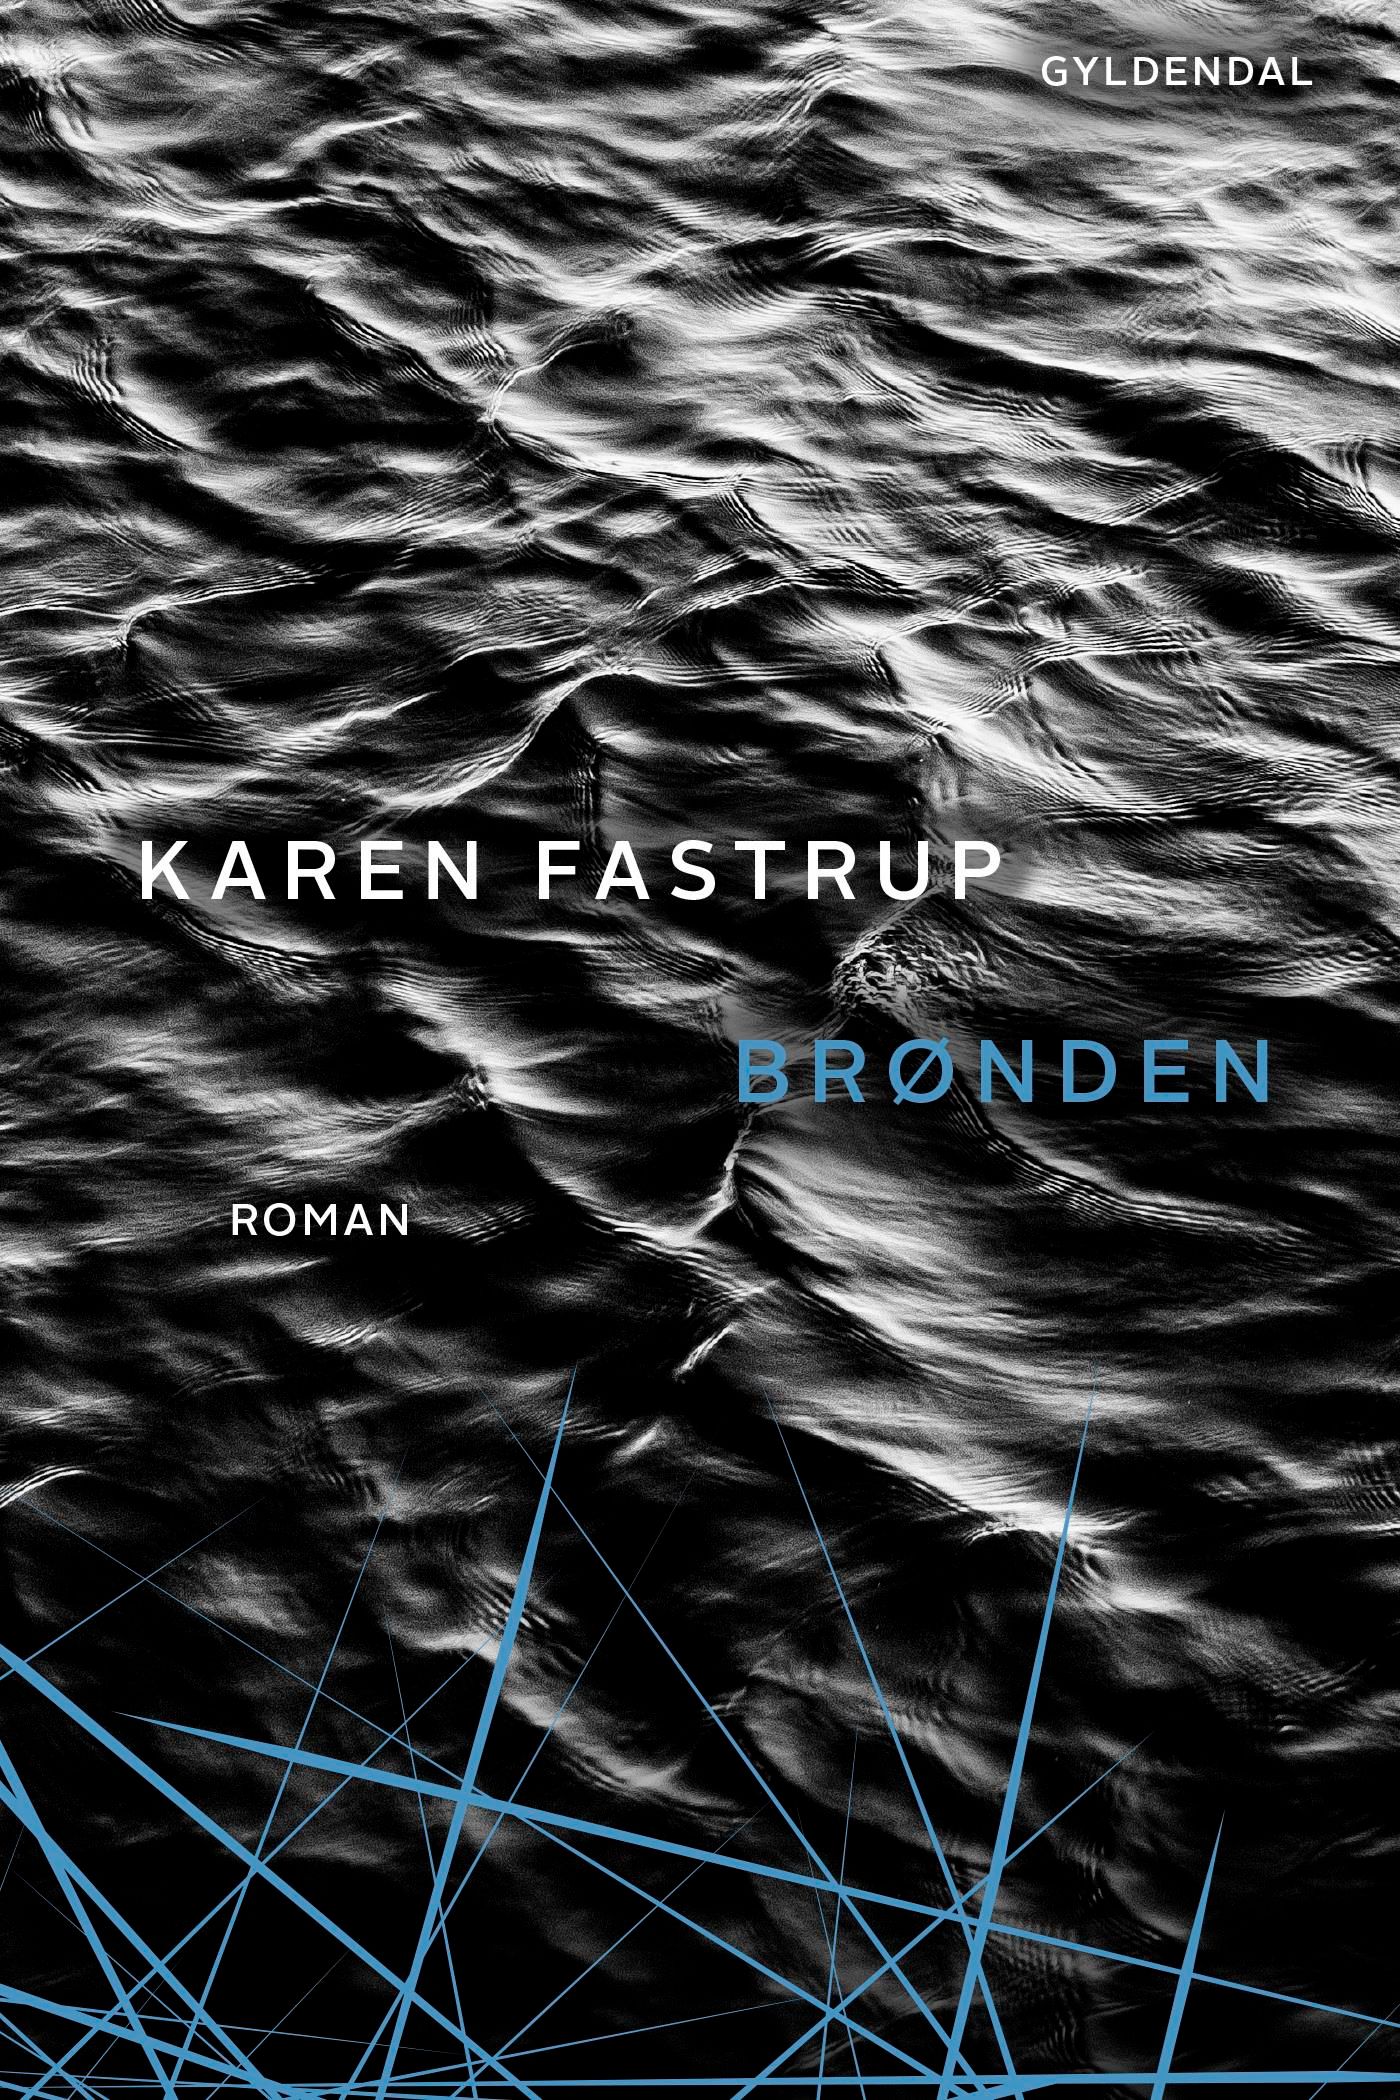 Brønden, eBook by Karen Fastrup